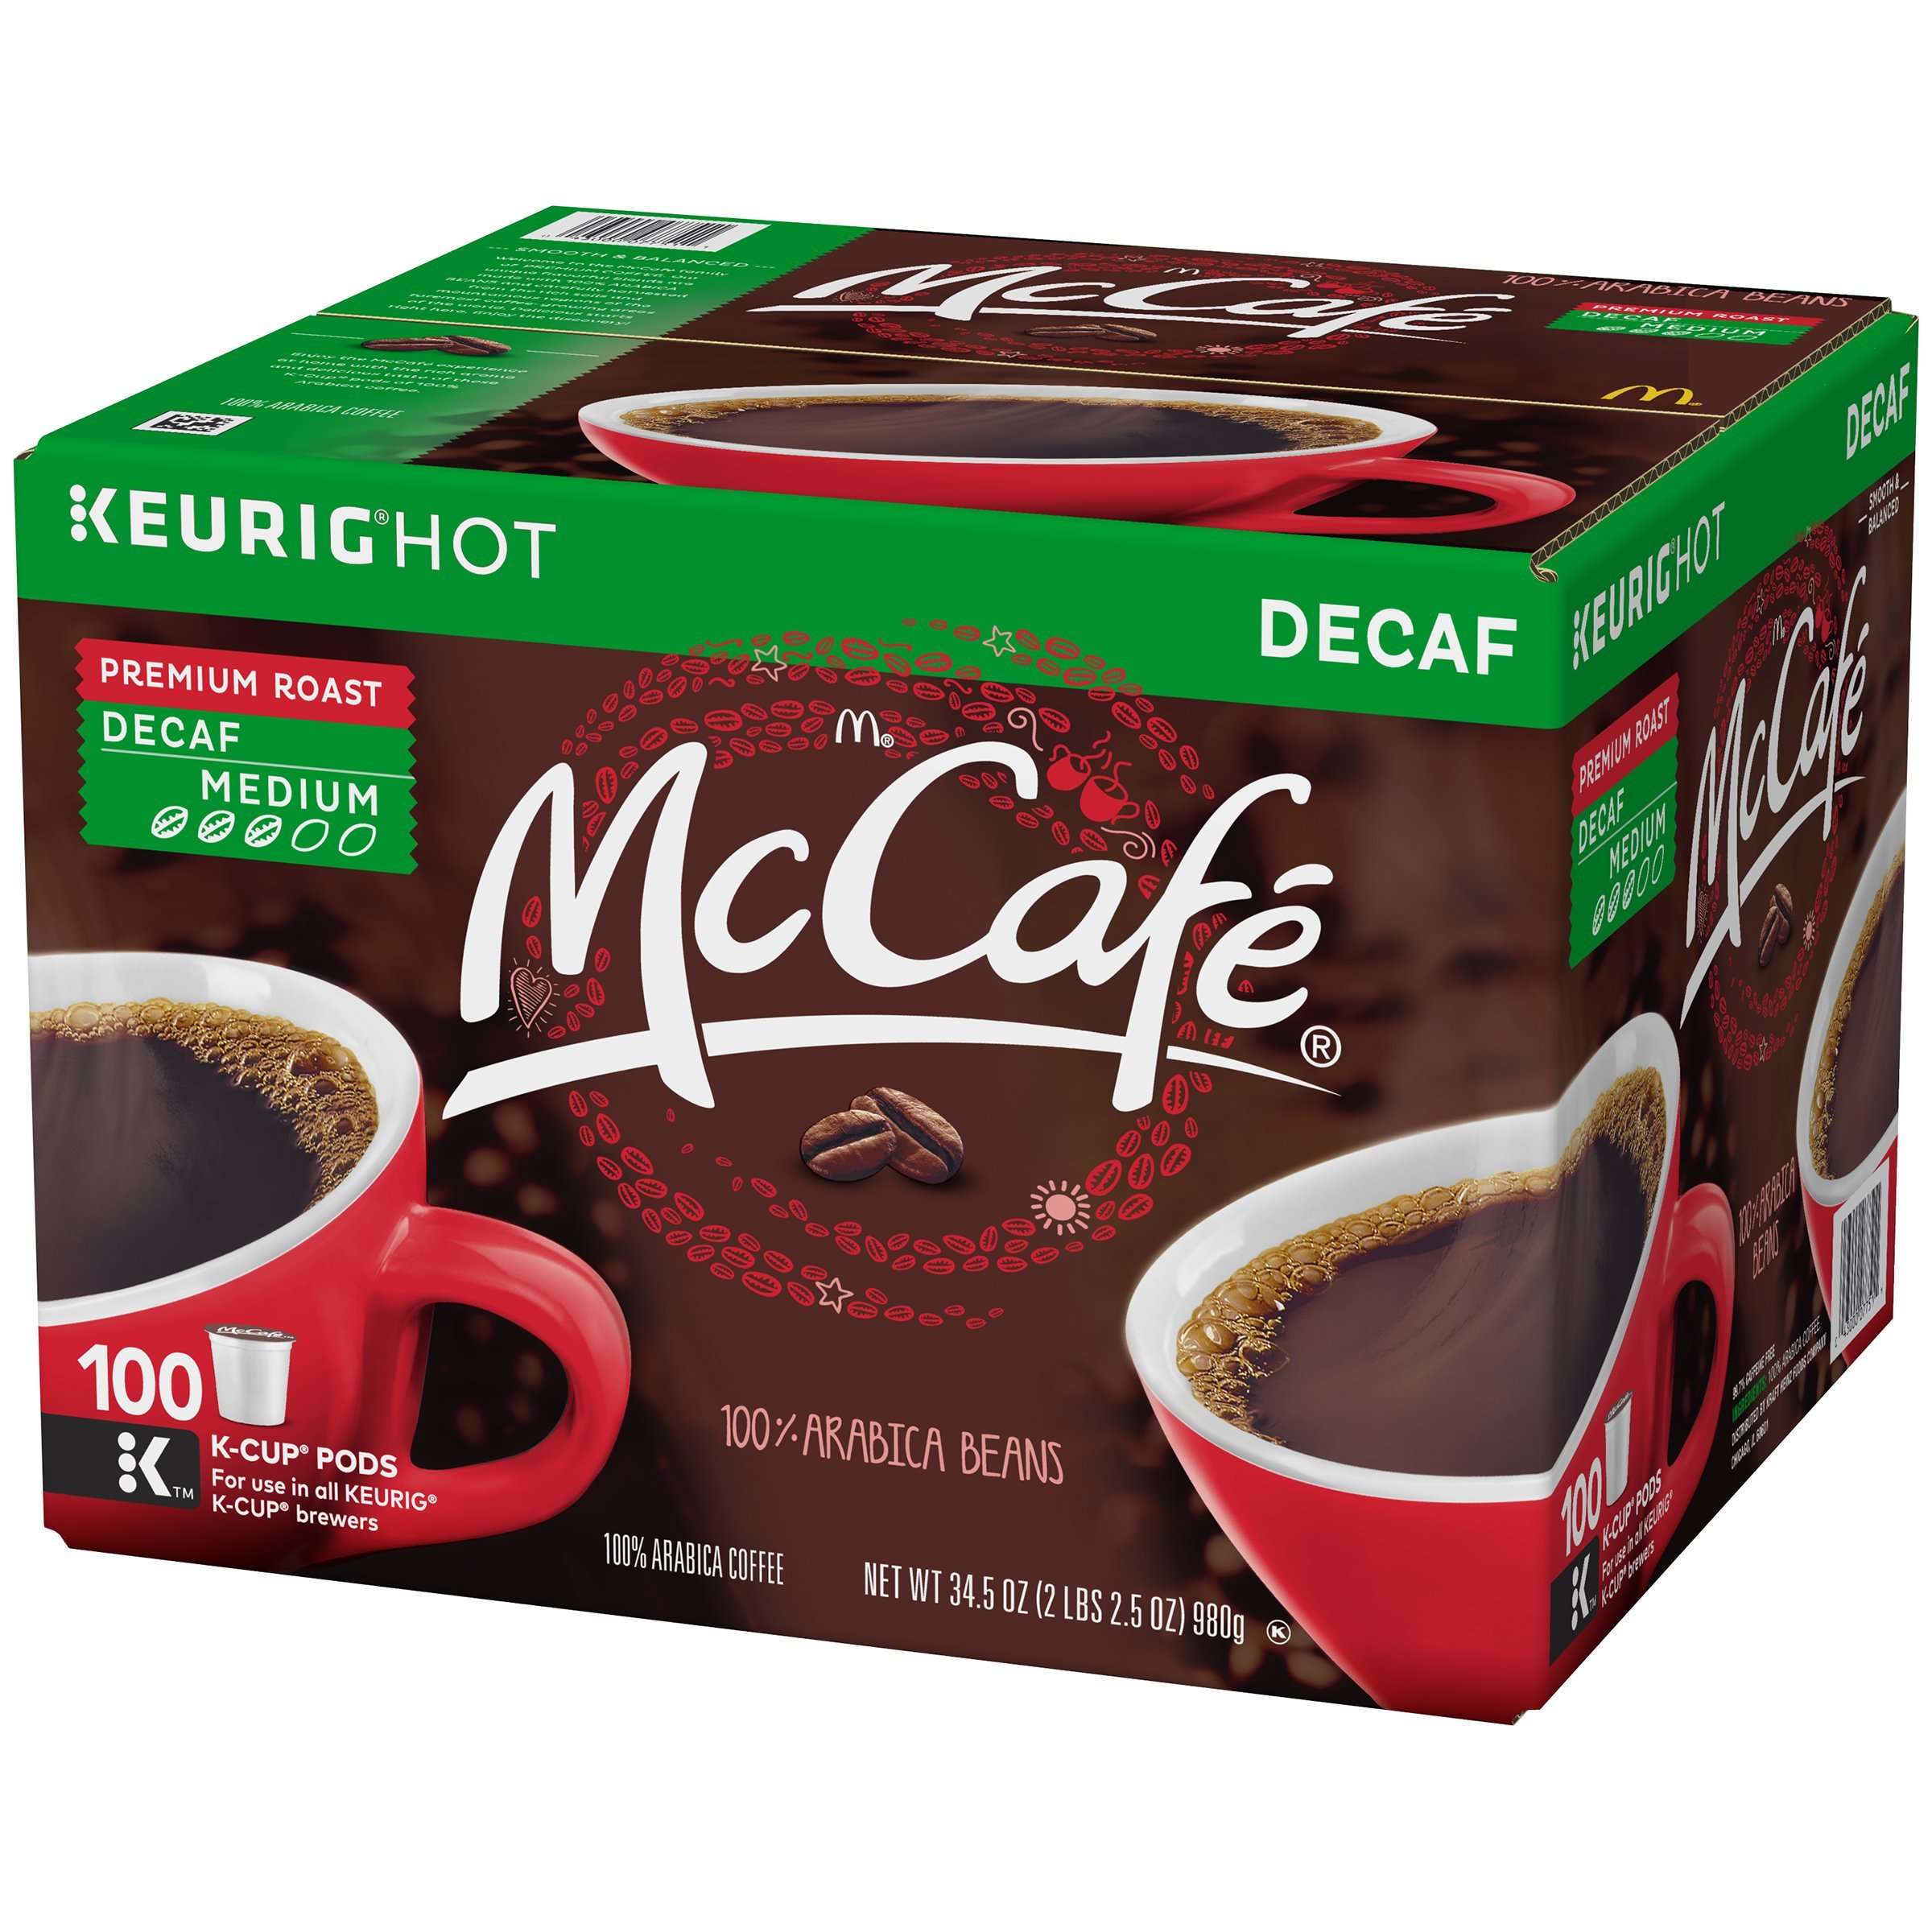 McCafe Premium Roast Decaf Coffee, K